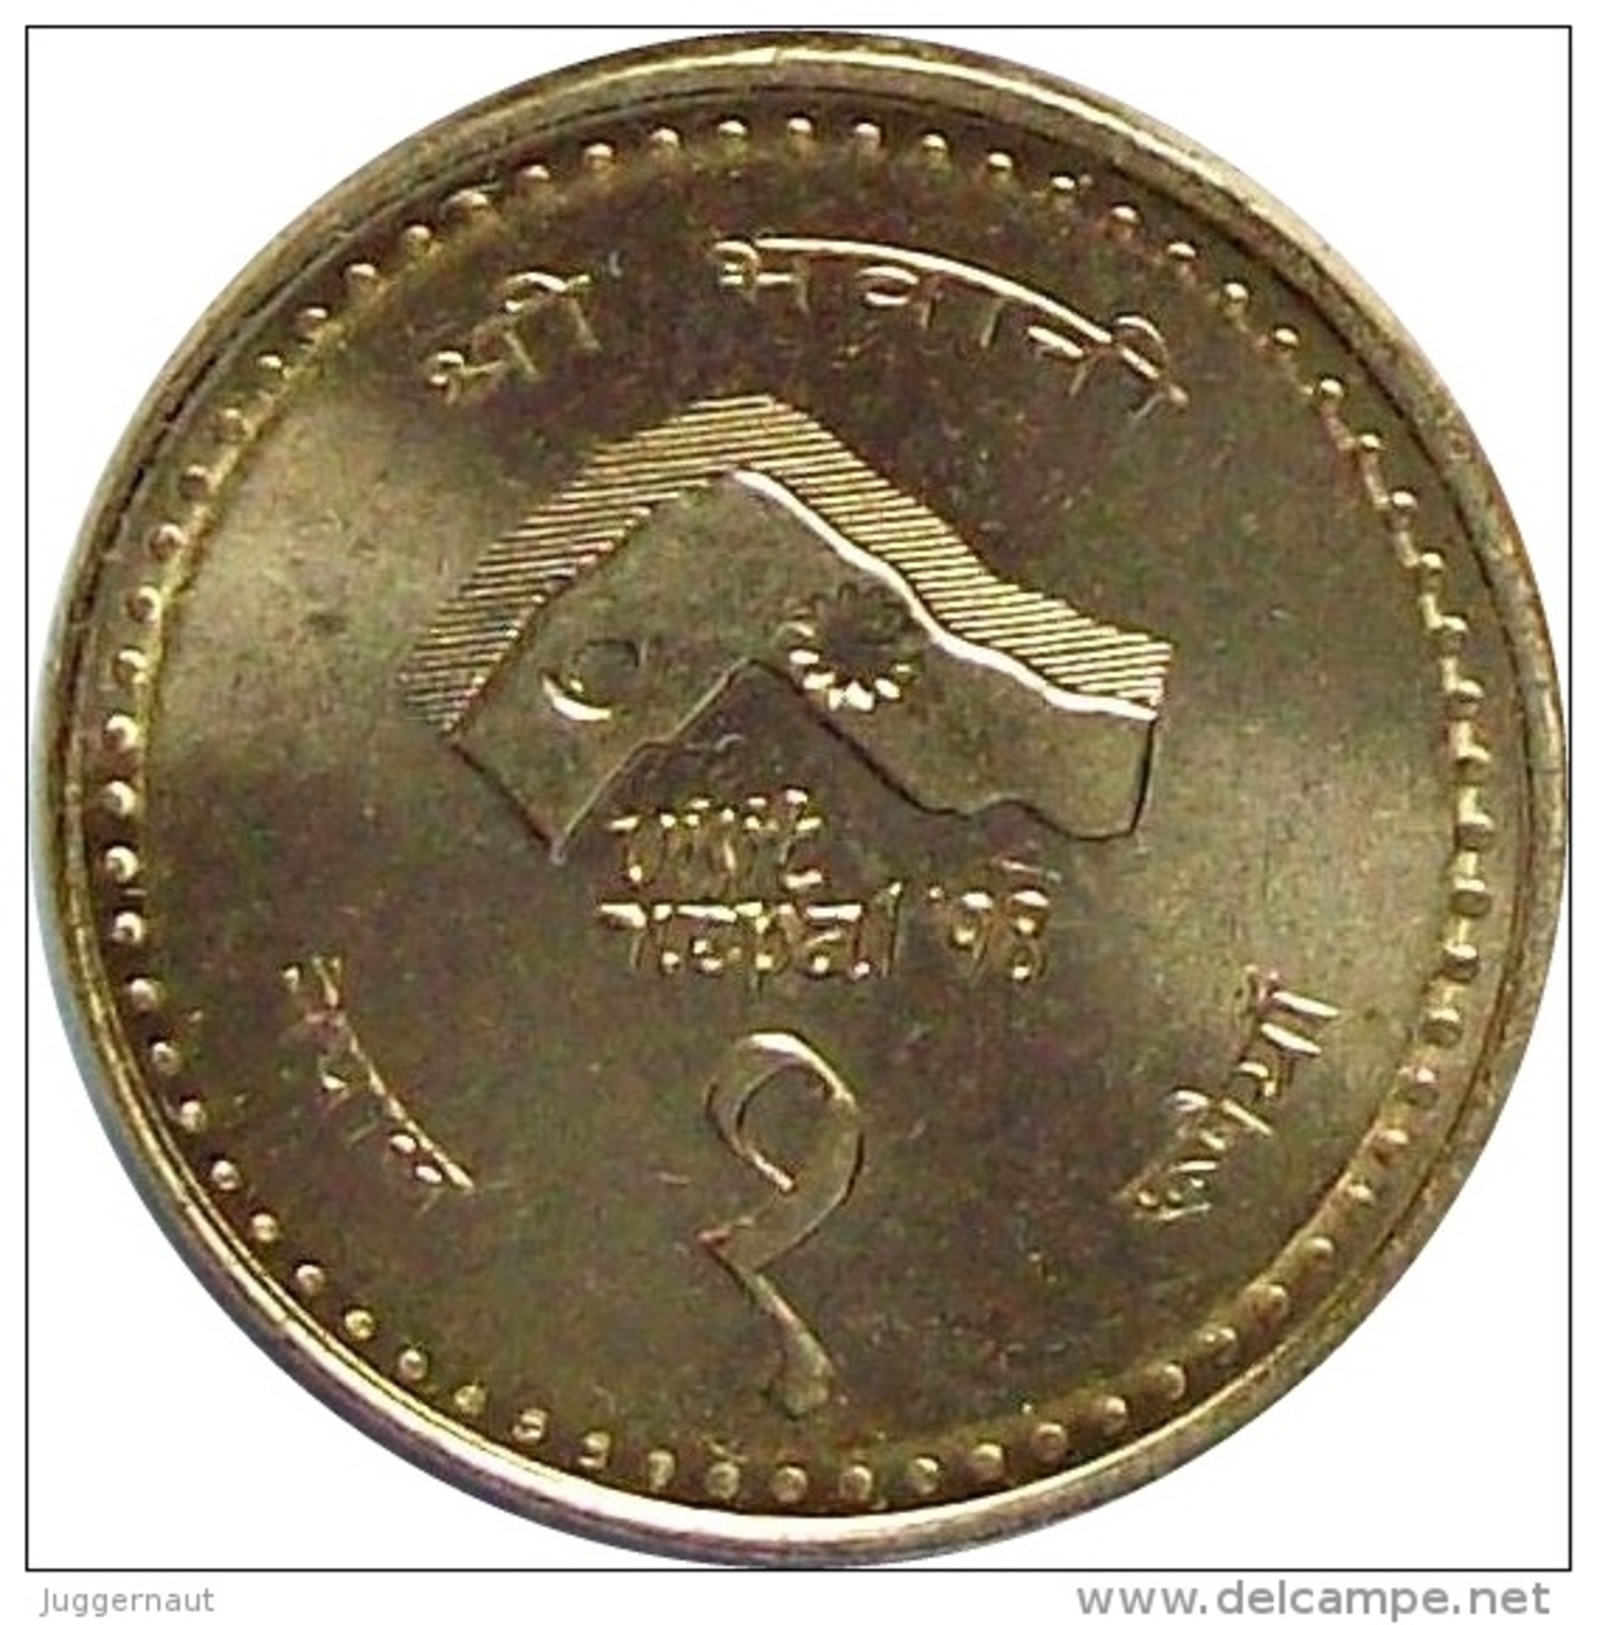 VISIT NEPAL YEAR 1998 RUPEE 1 BRASS COIN NEPAL 1997 KM-1115 UNCIRCULATED UNC - Népal